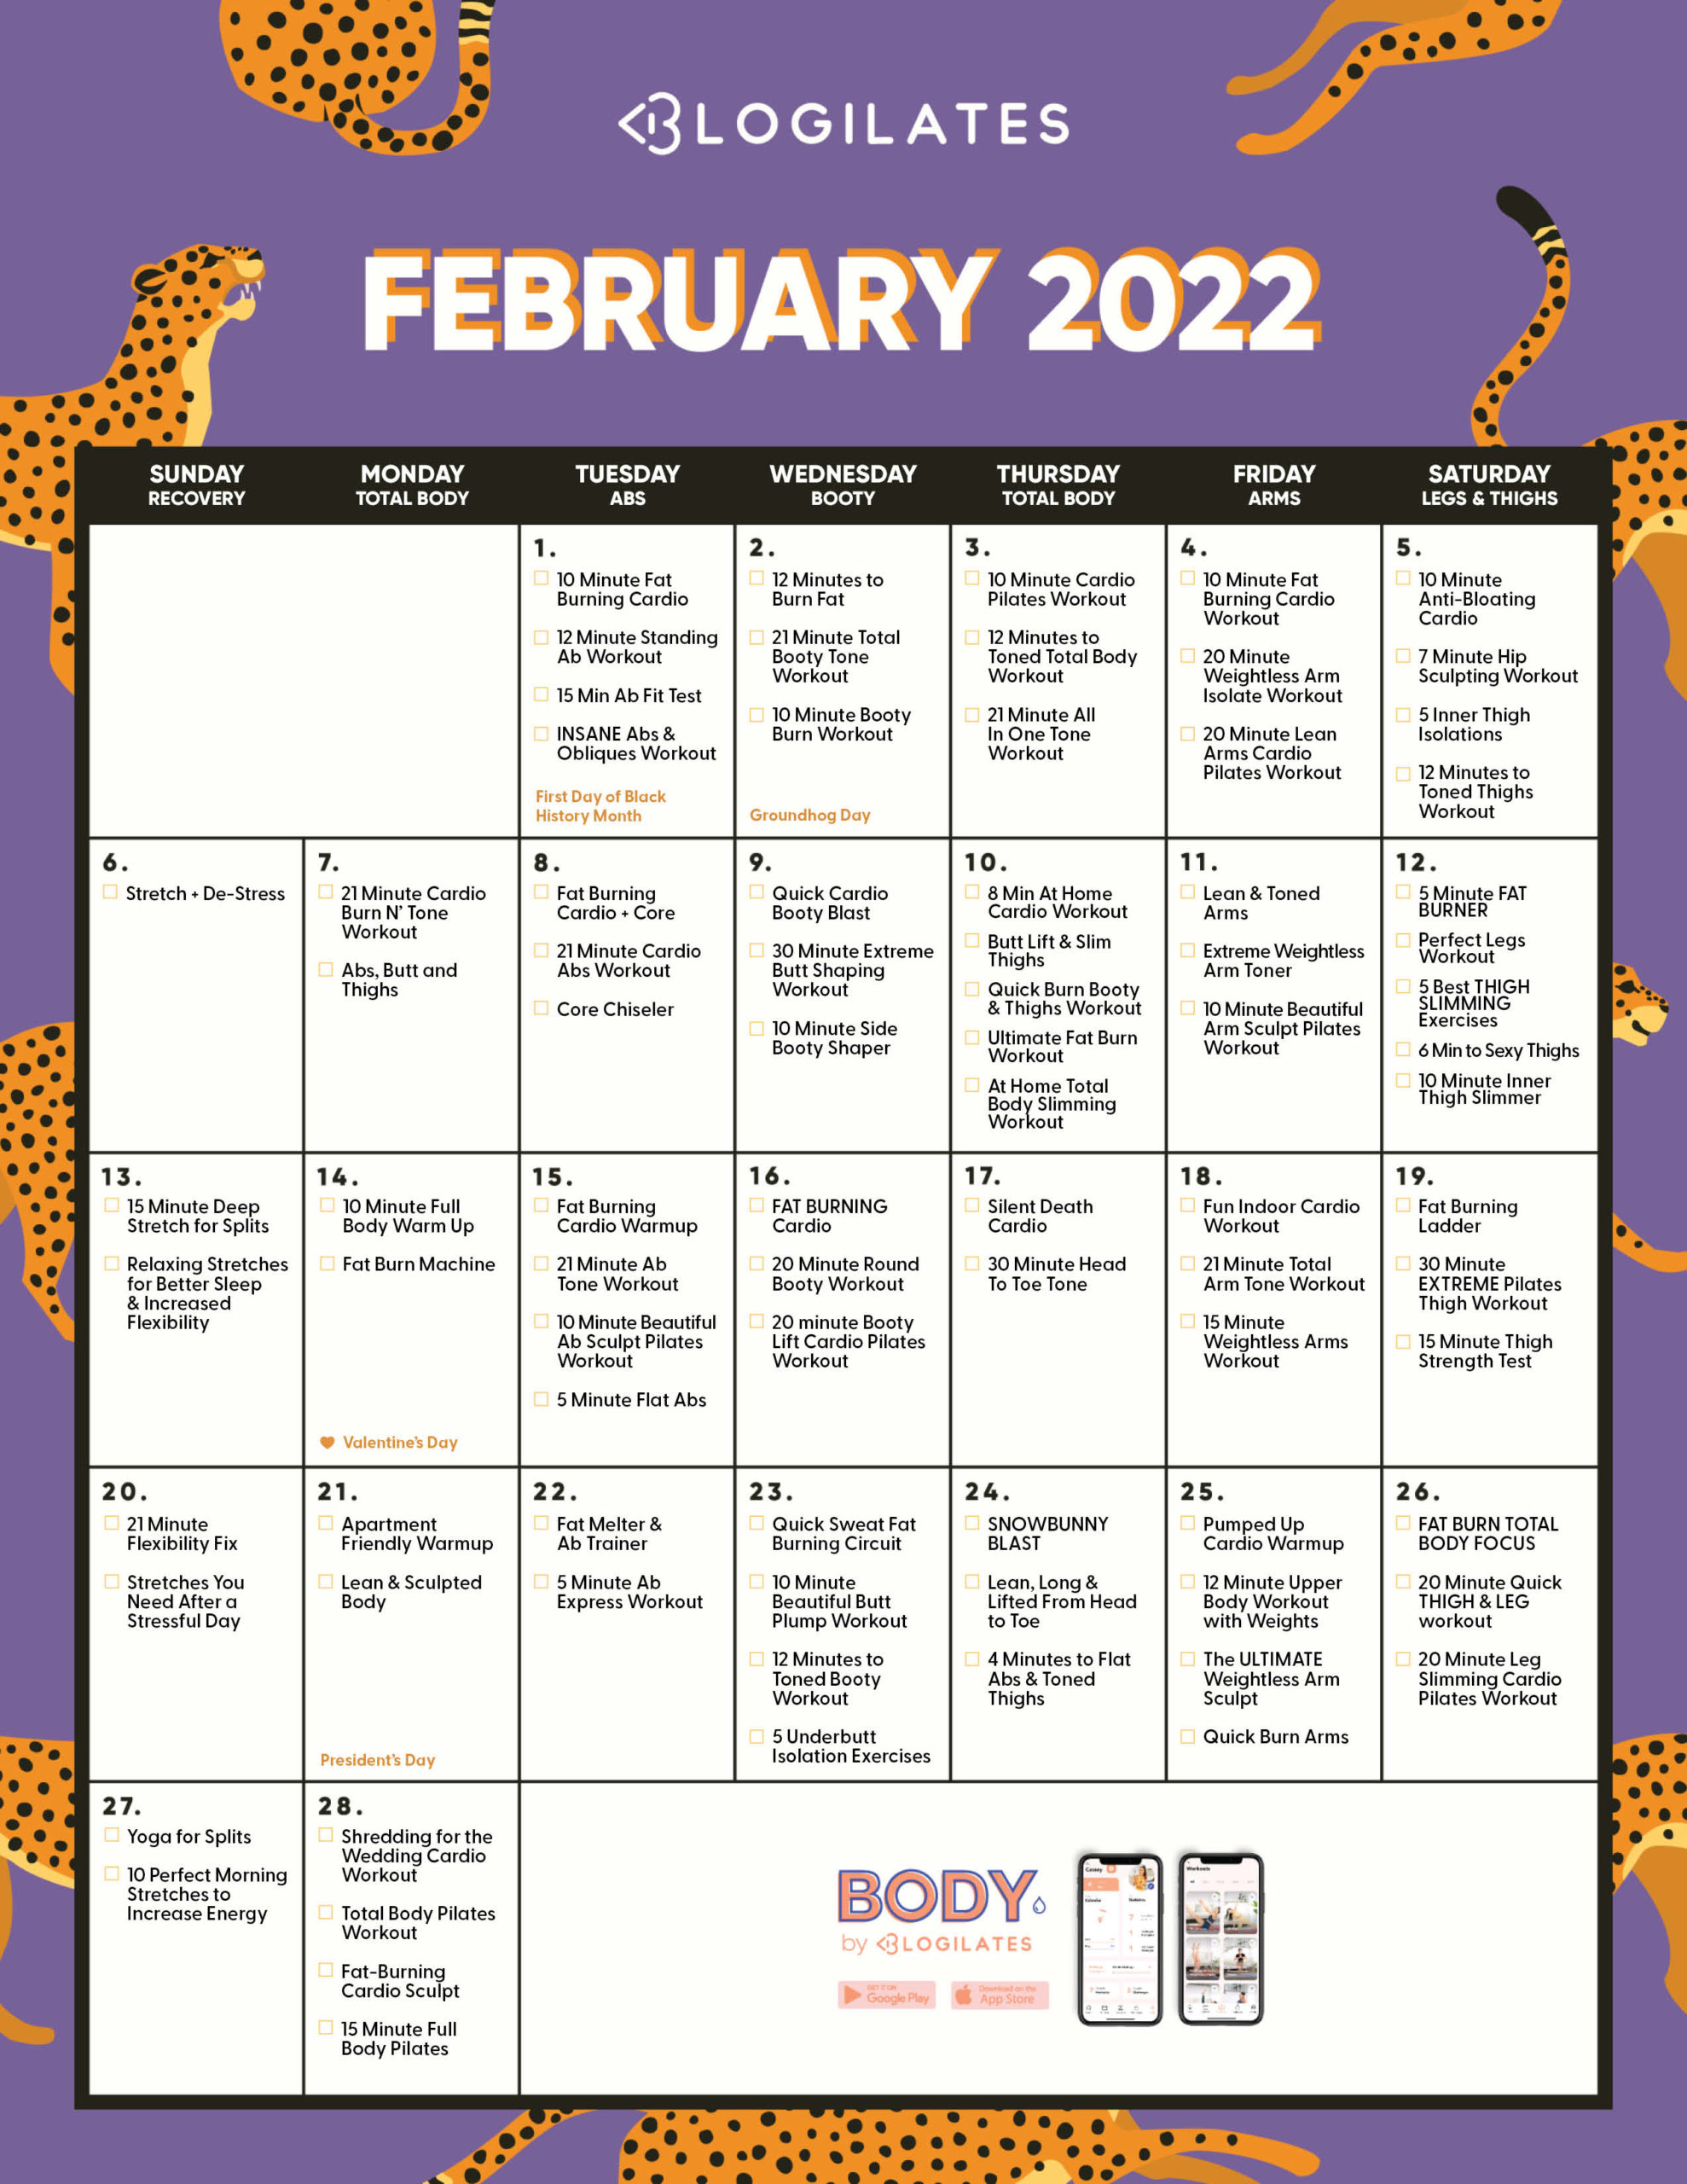 February 2022 Calendar The Blogilates February 2022 Workout Calendar! - Blogilates